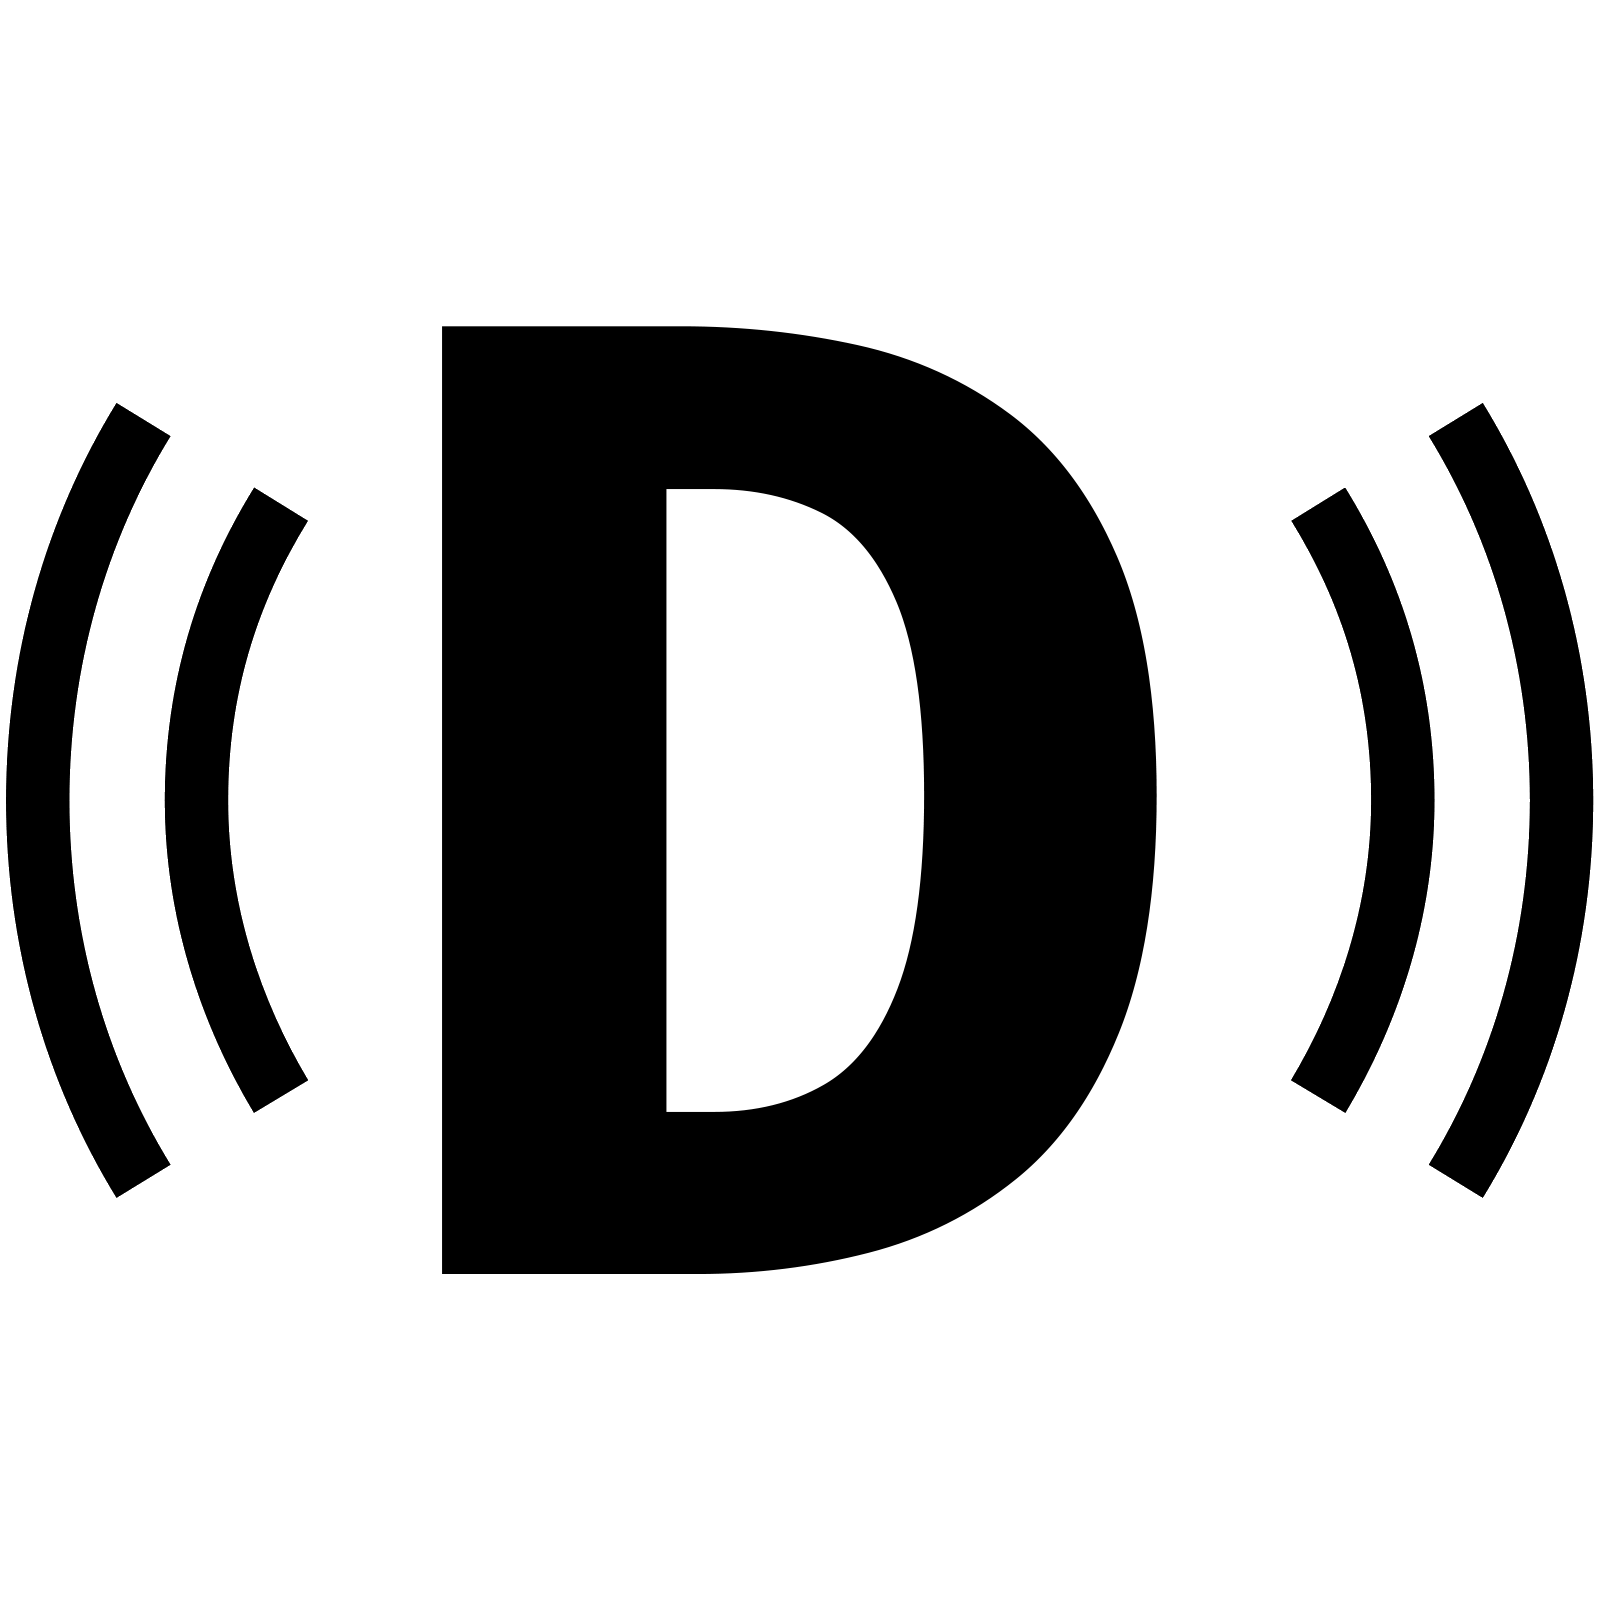 DomainScout's logo